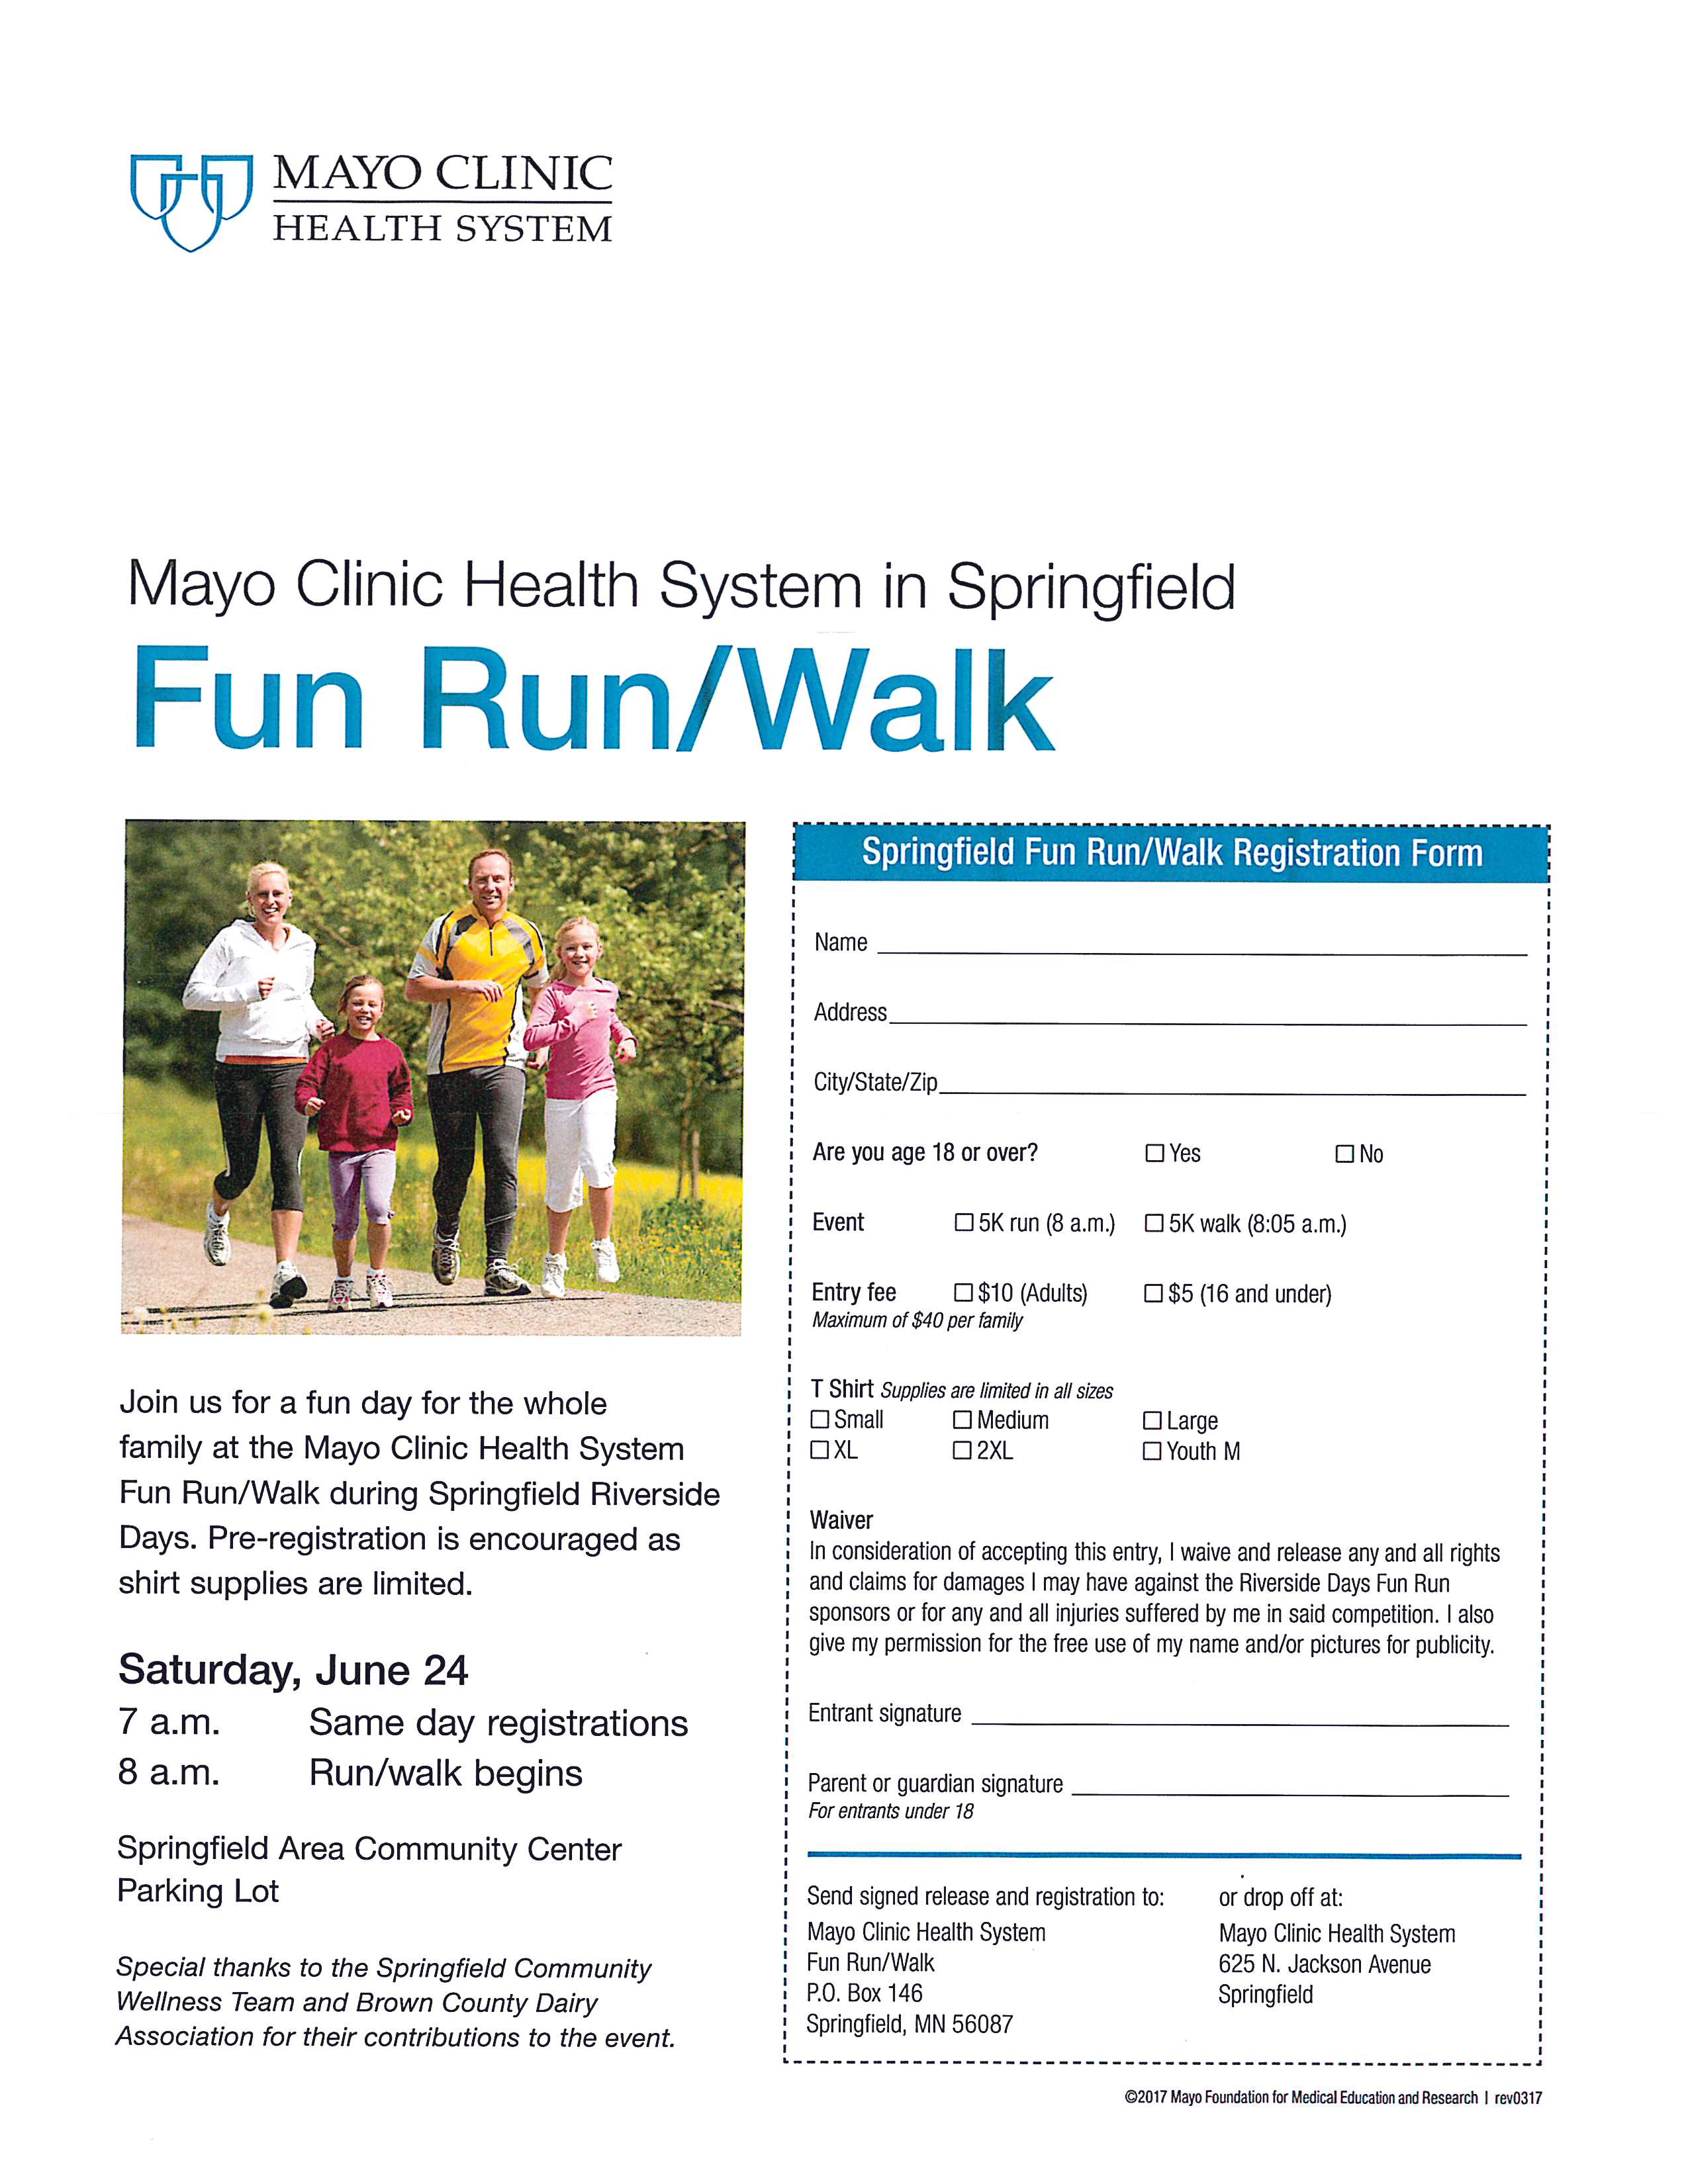 Mayo Clinic Health System In Springfield 5k Fun Run Walk